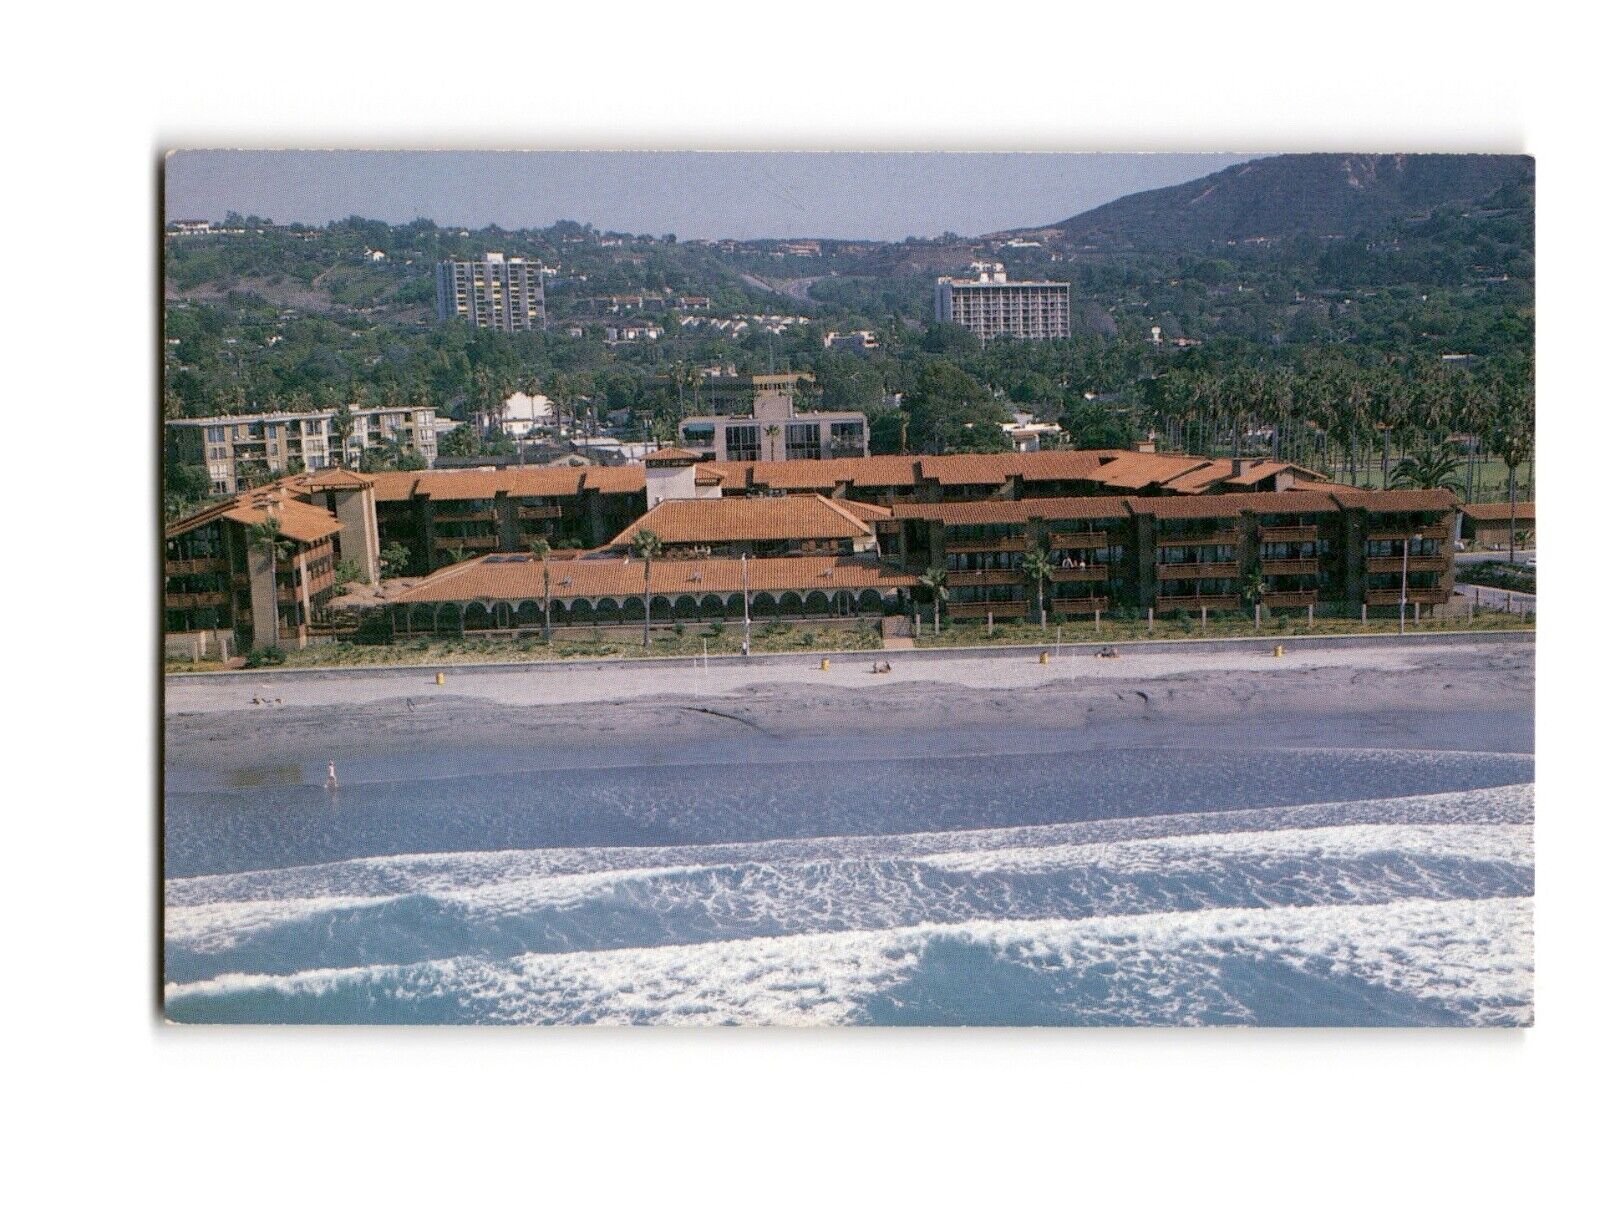 Sea Lodge Hotel La Jolla California Aerial View Vintage Chrome Postcard